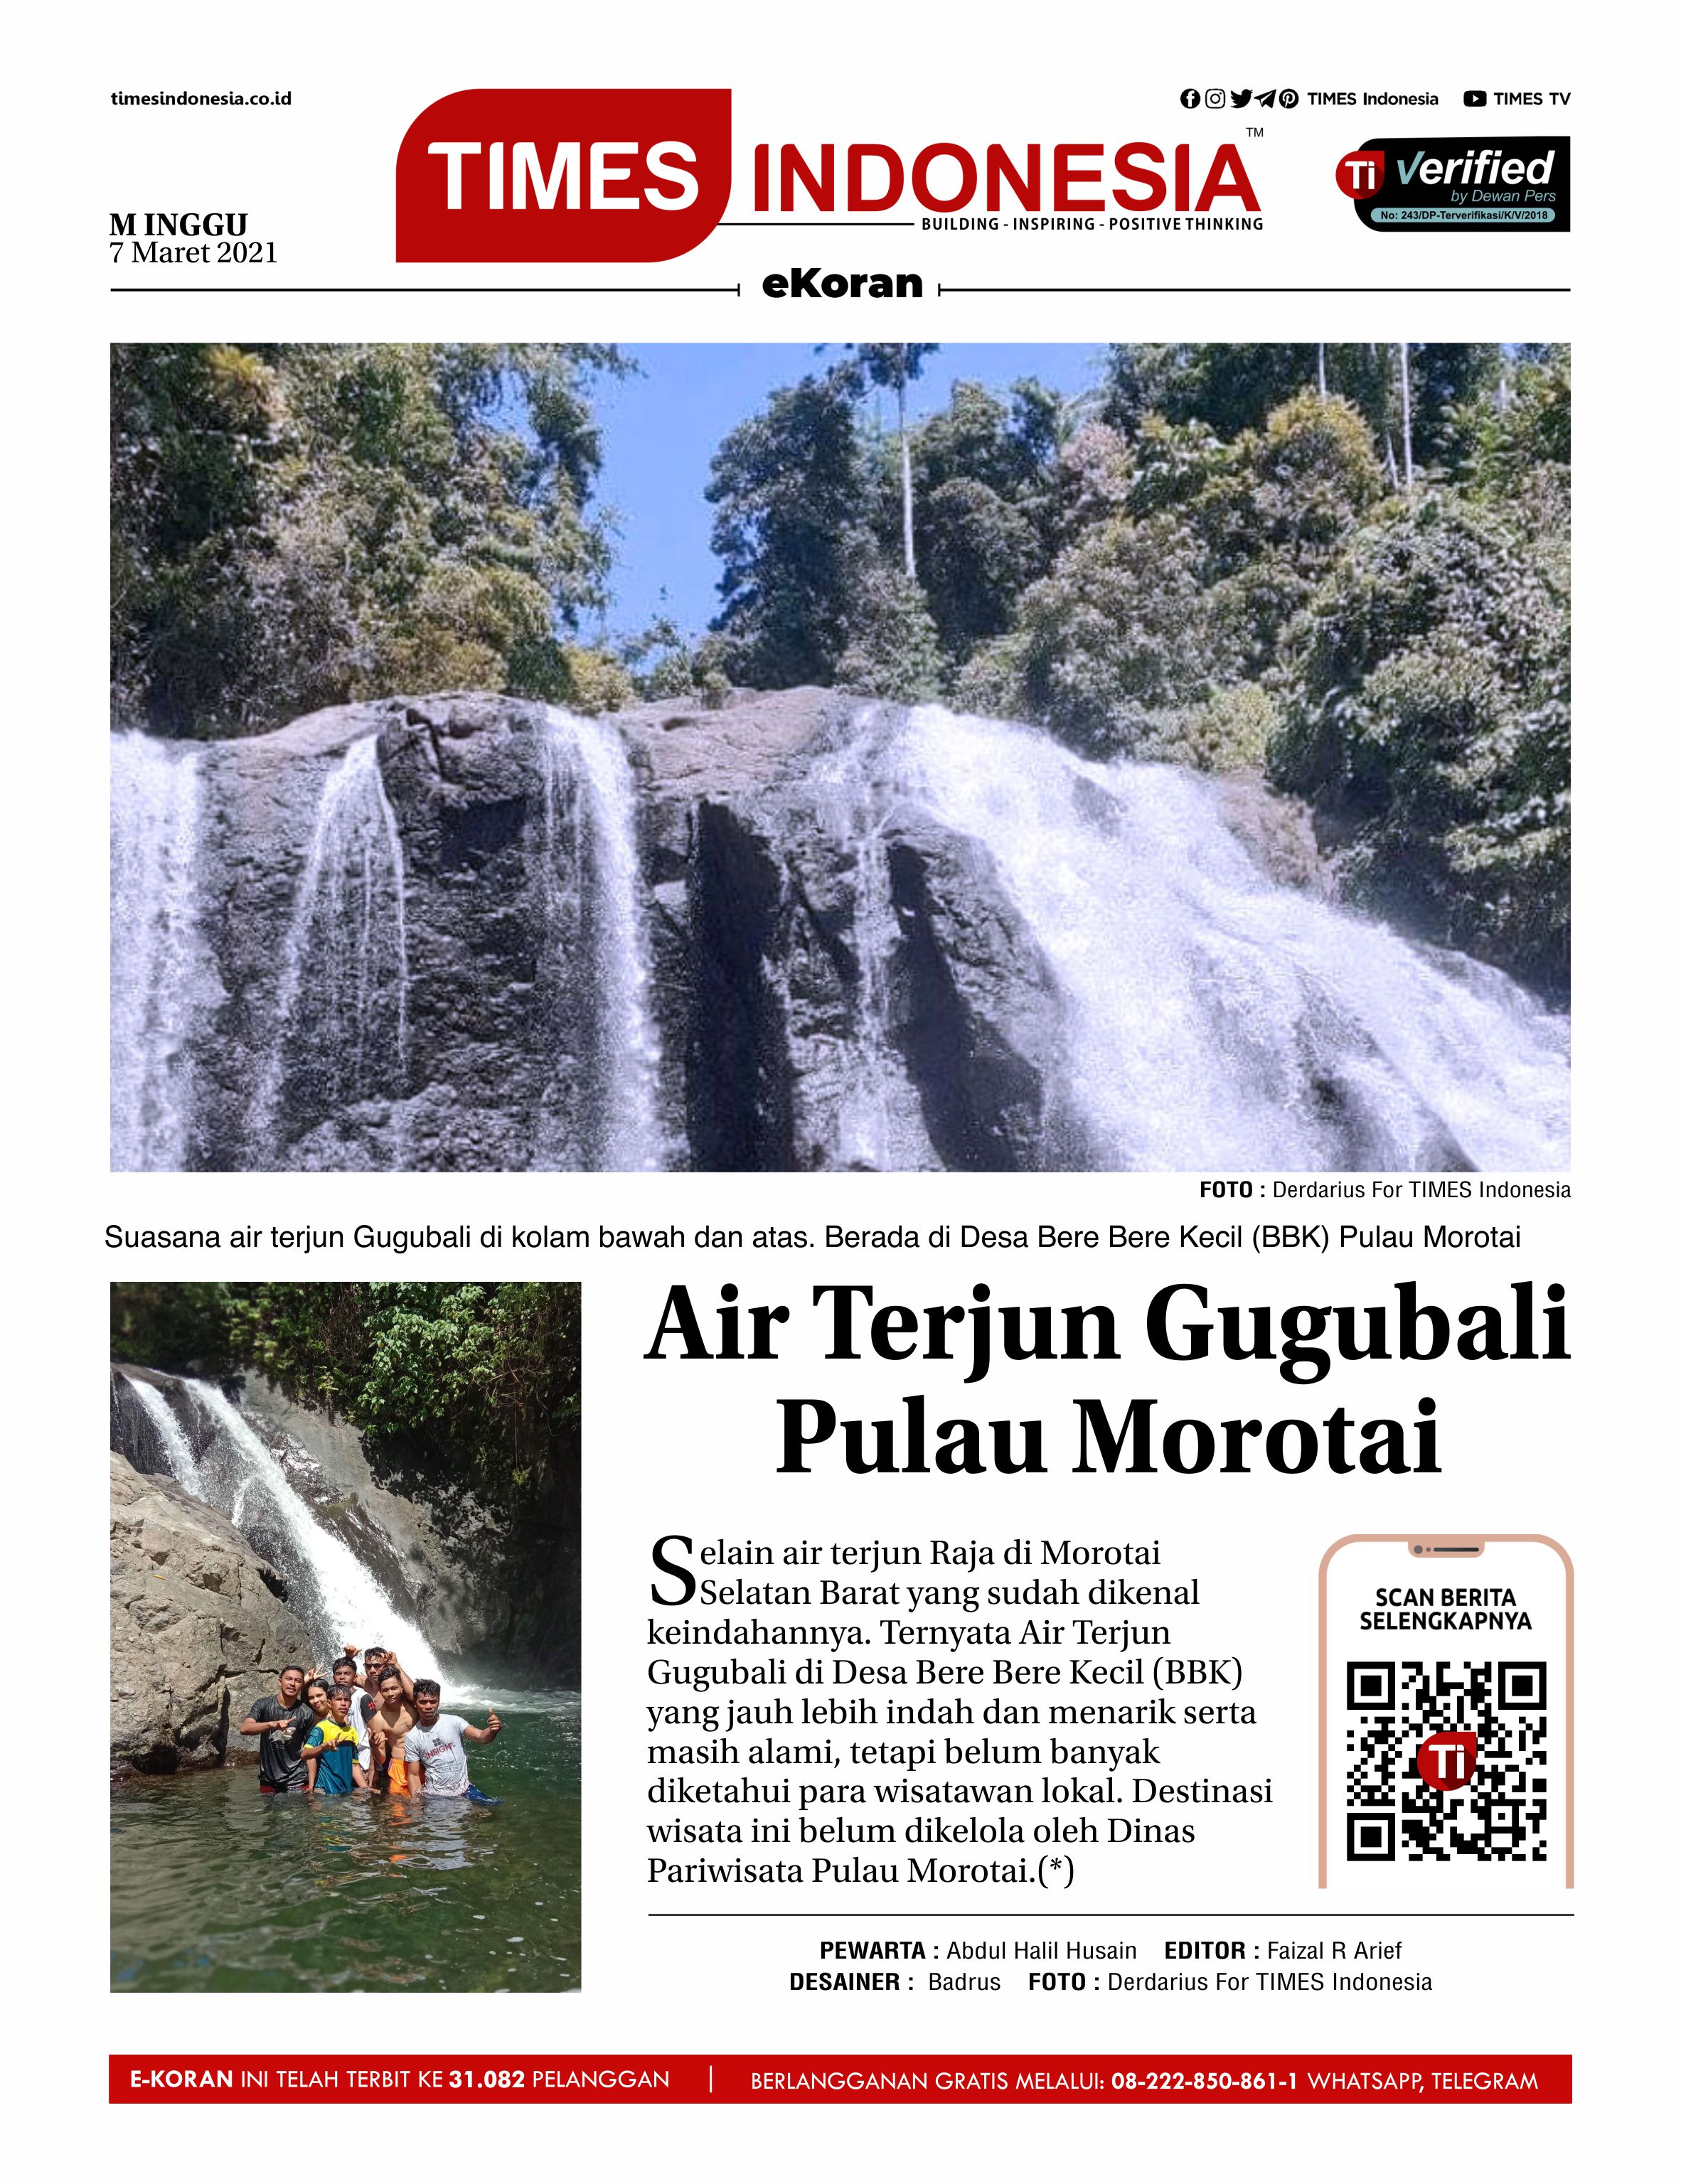 Ekoran-Minggu-7-Maret-2021-Air-Terjun-Gugubali-Pulau-Morotai.jpg